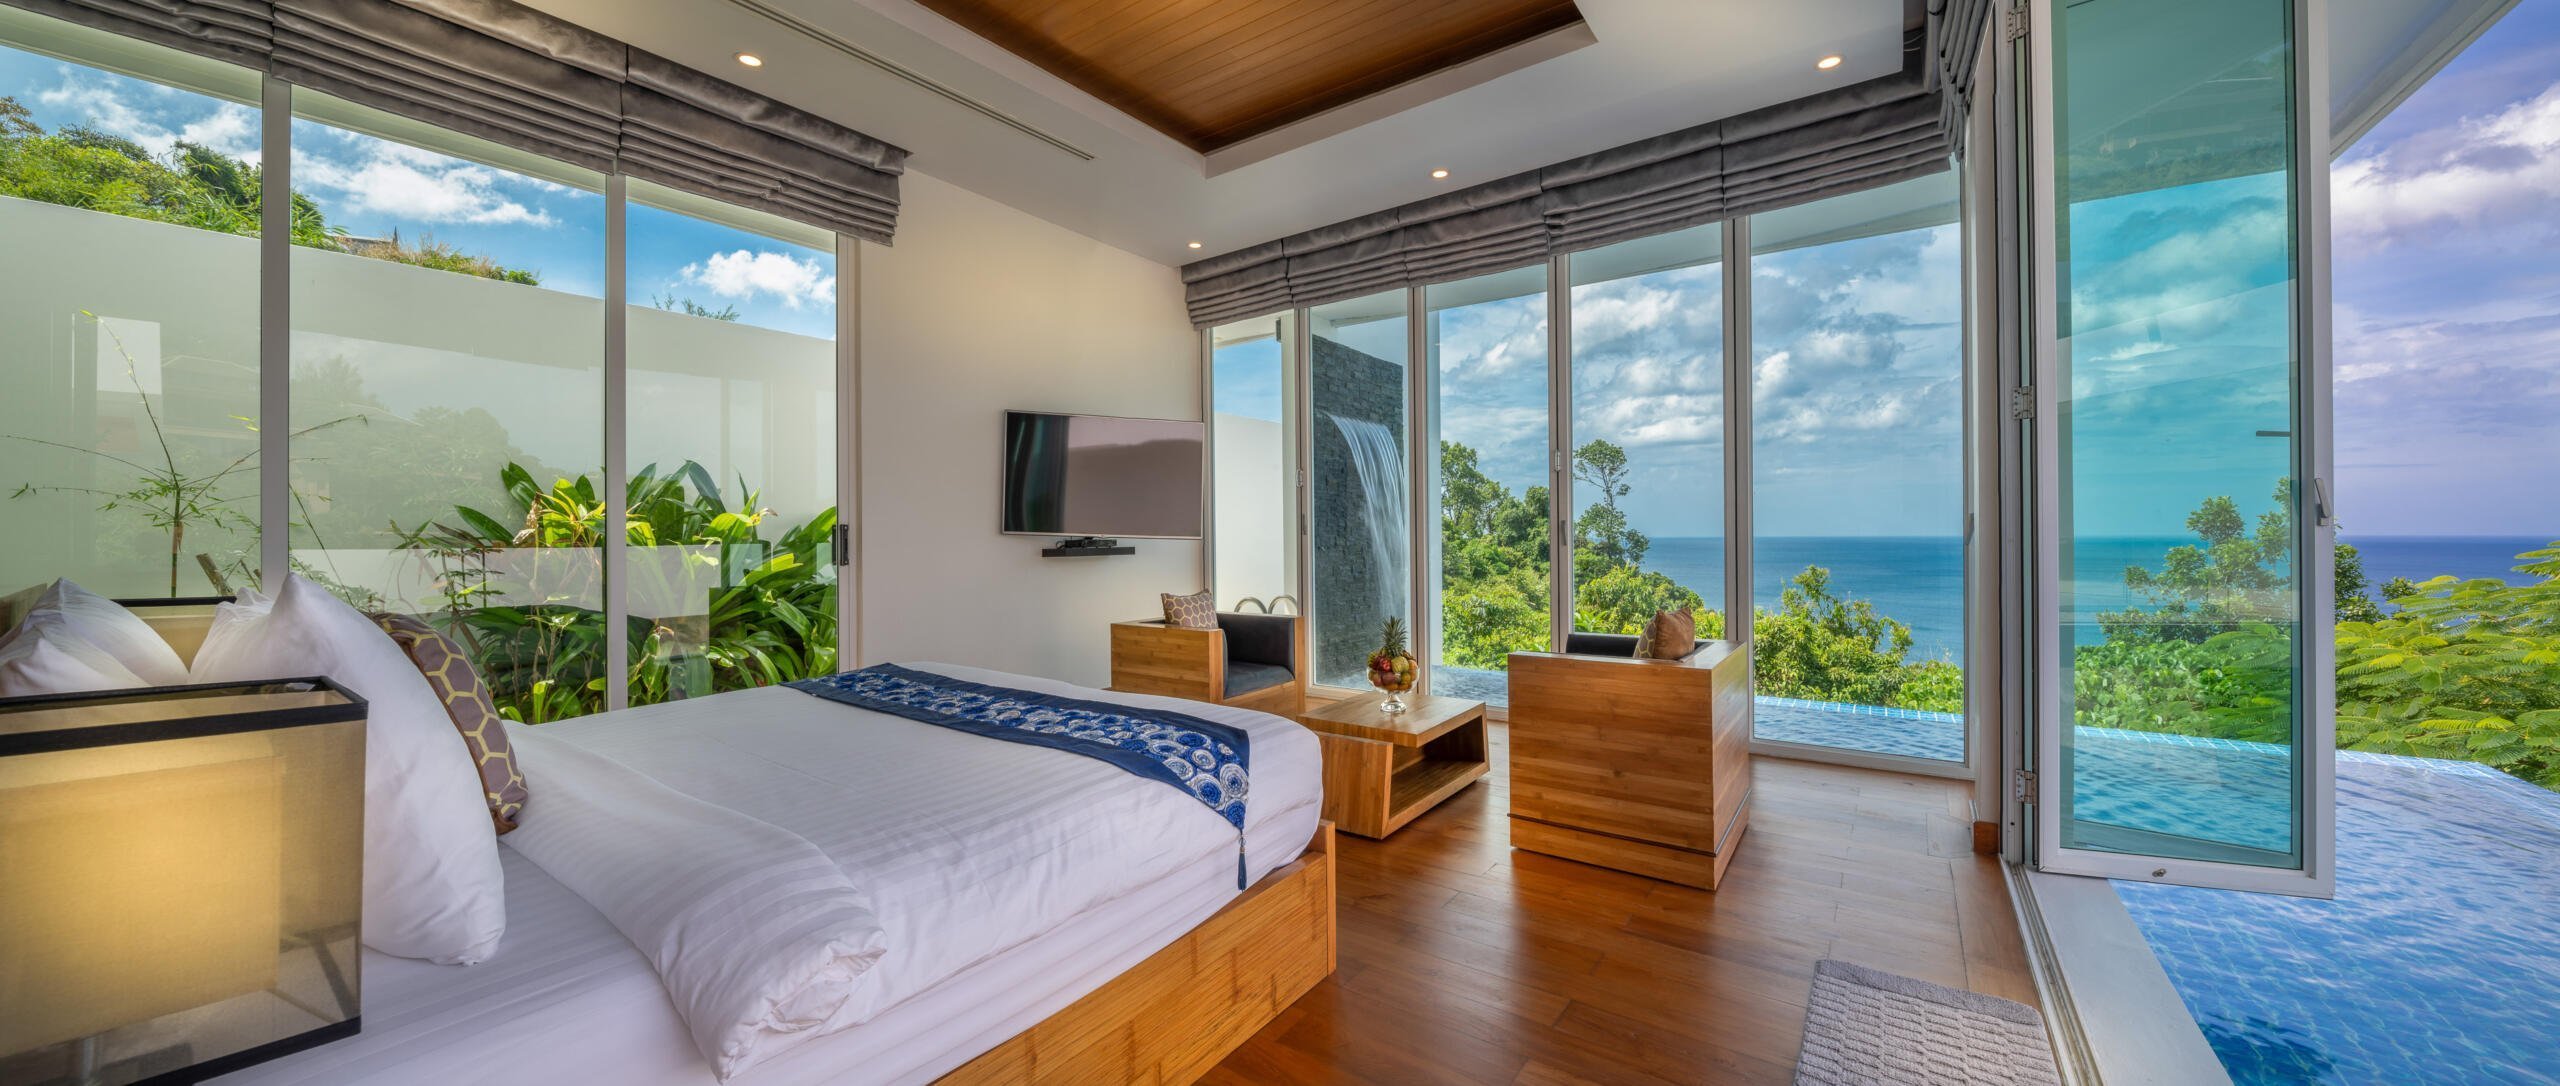 villa solaris view from first master bedroom